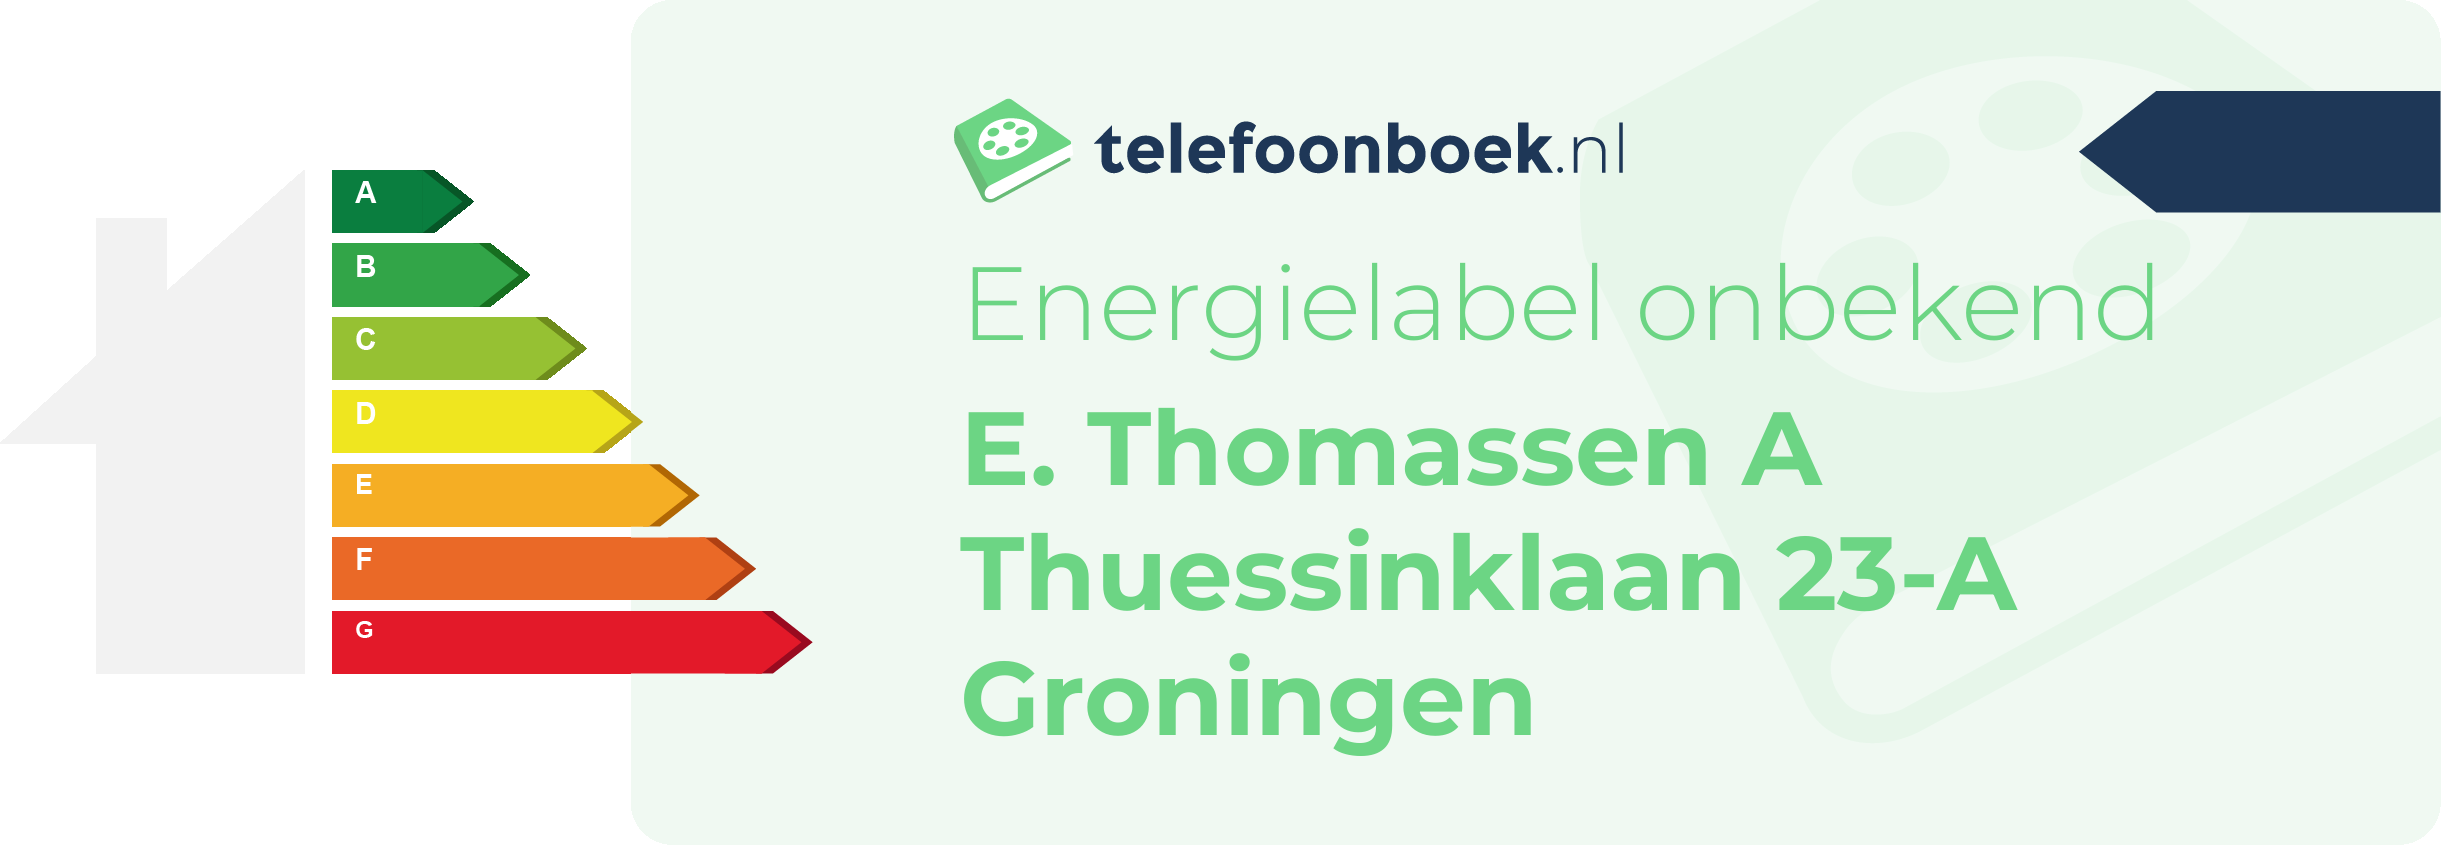 Energielabel E. Thomassen A Thuessinklaan 23-A Groningen